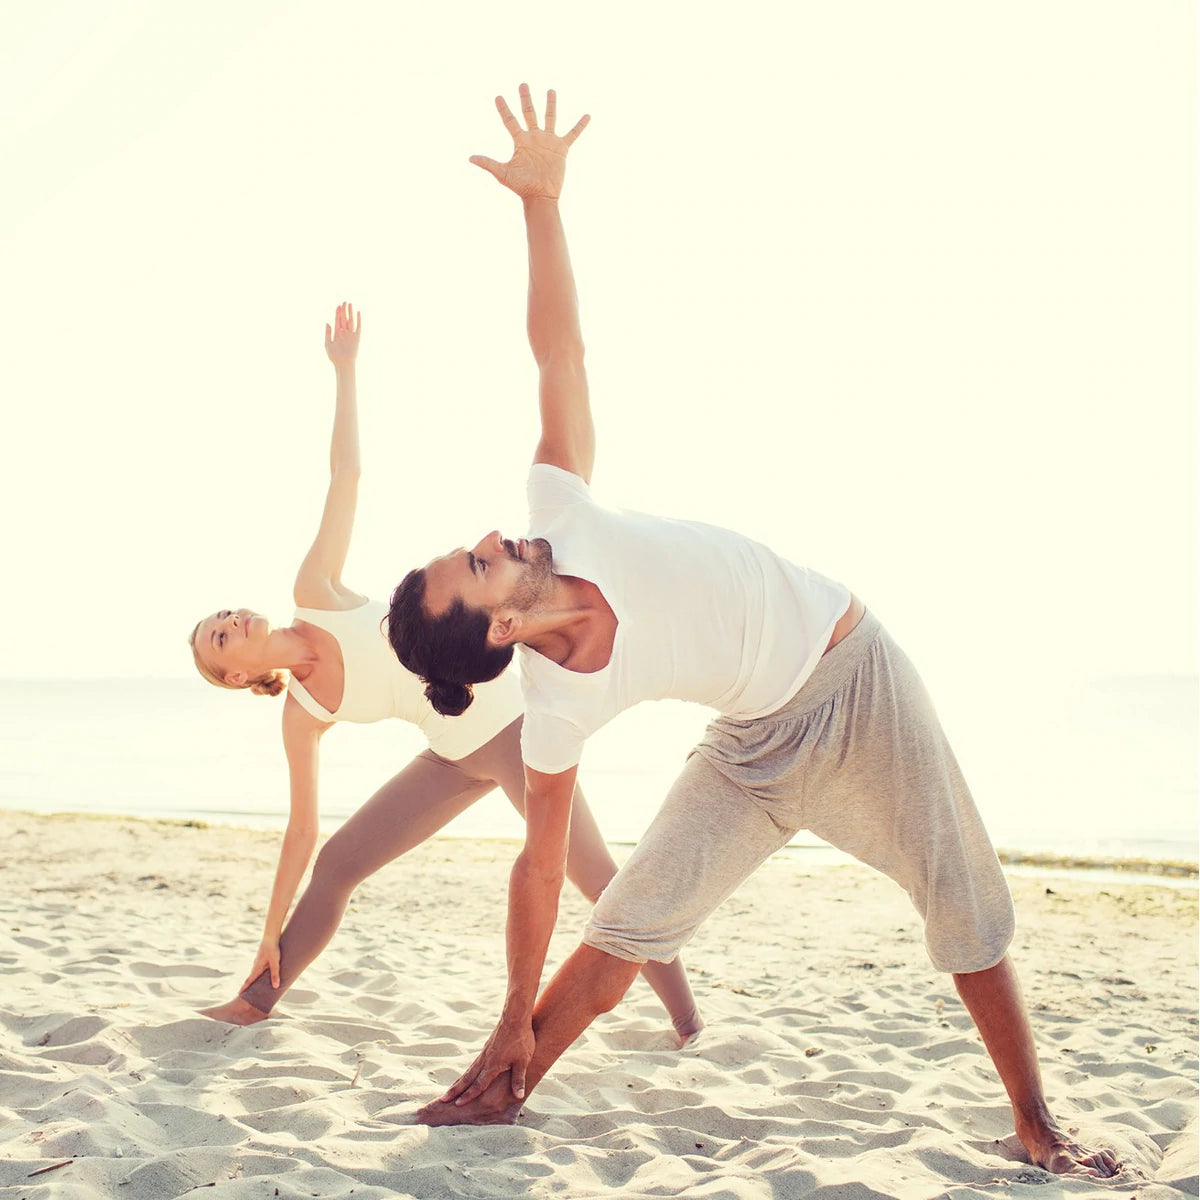 Man and lady on a beach practicing yoga, performing the yoga posture trikonasana, the triangle pose